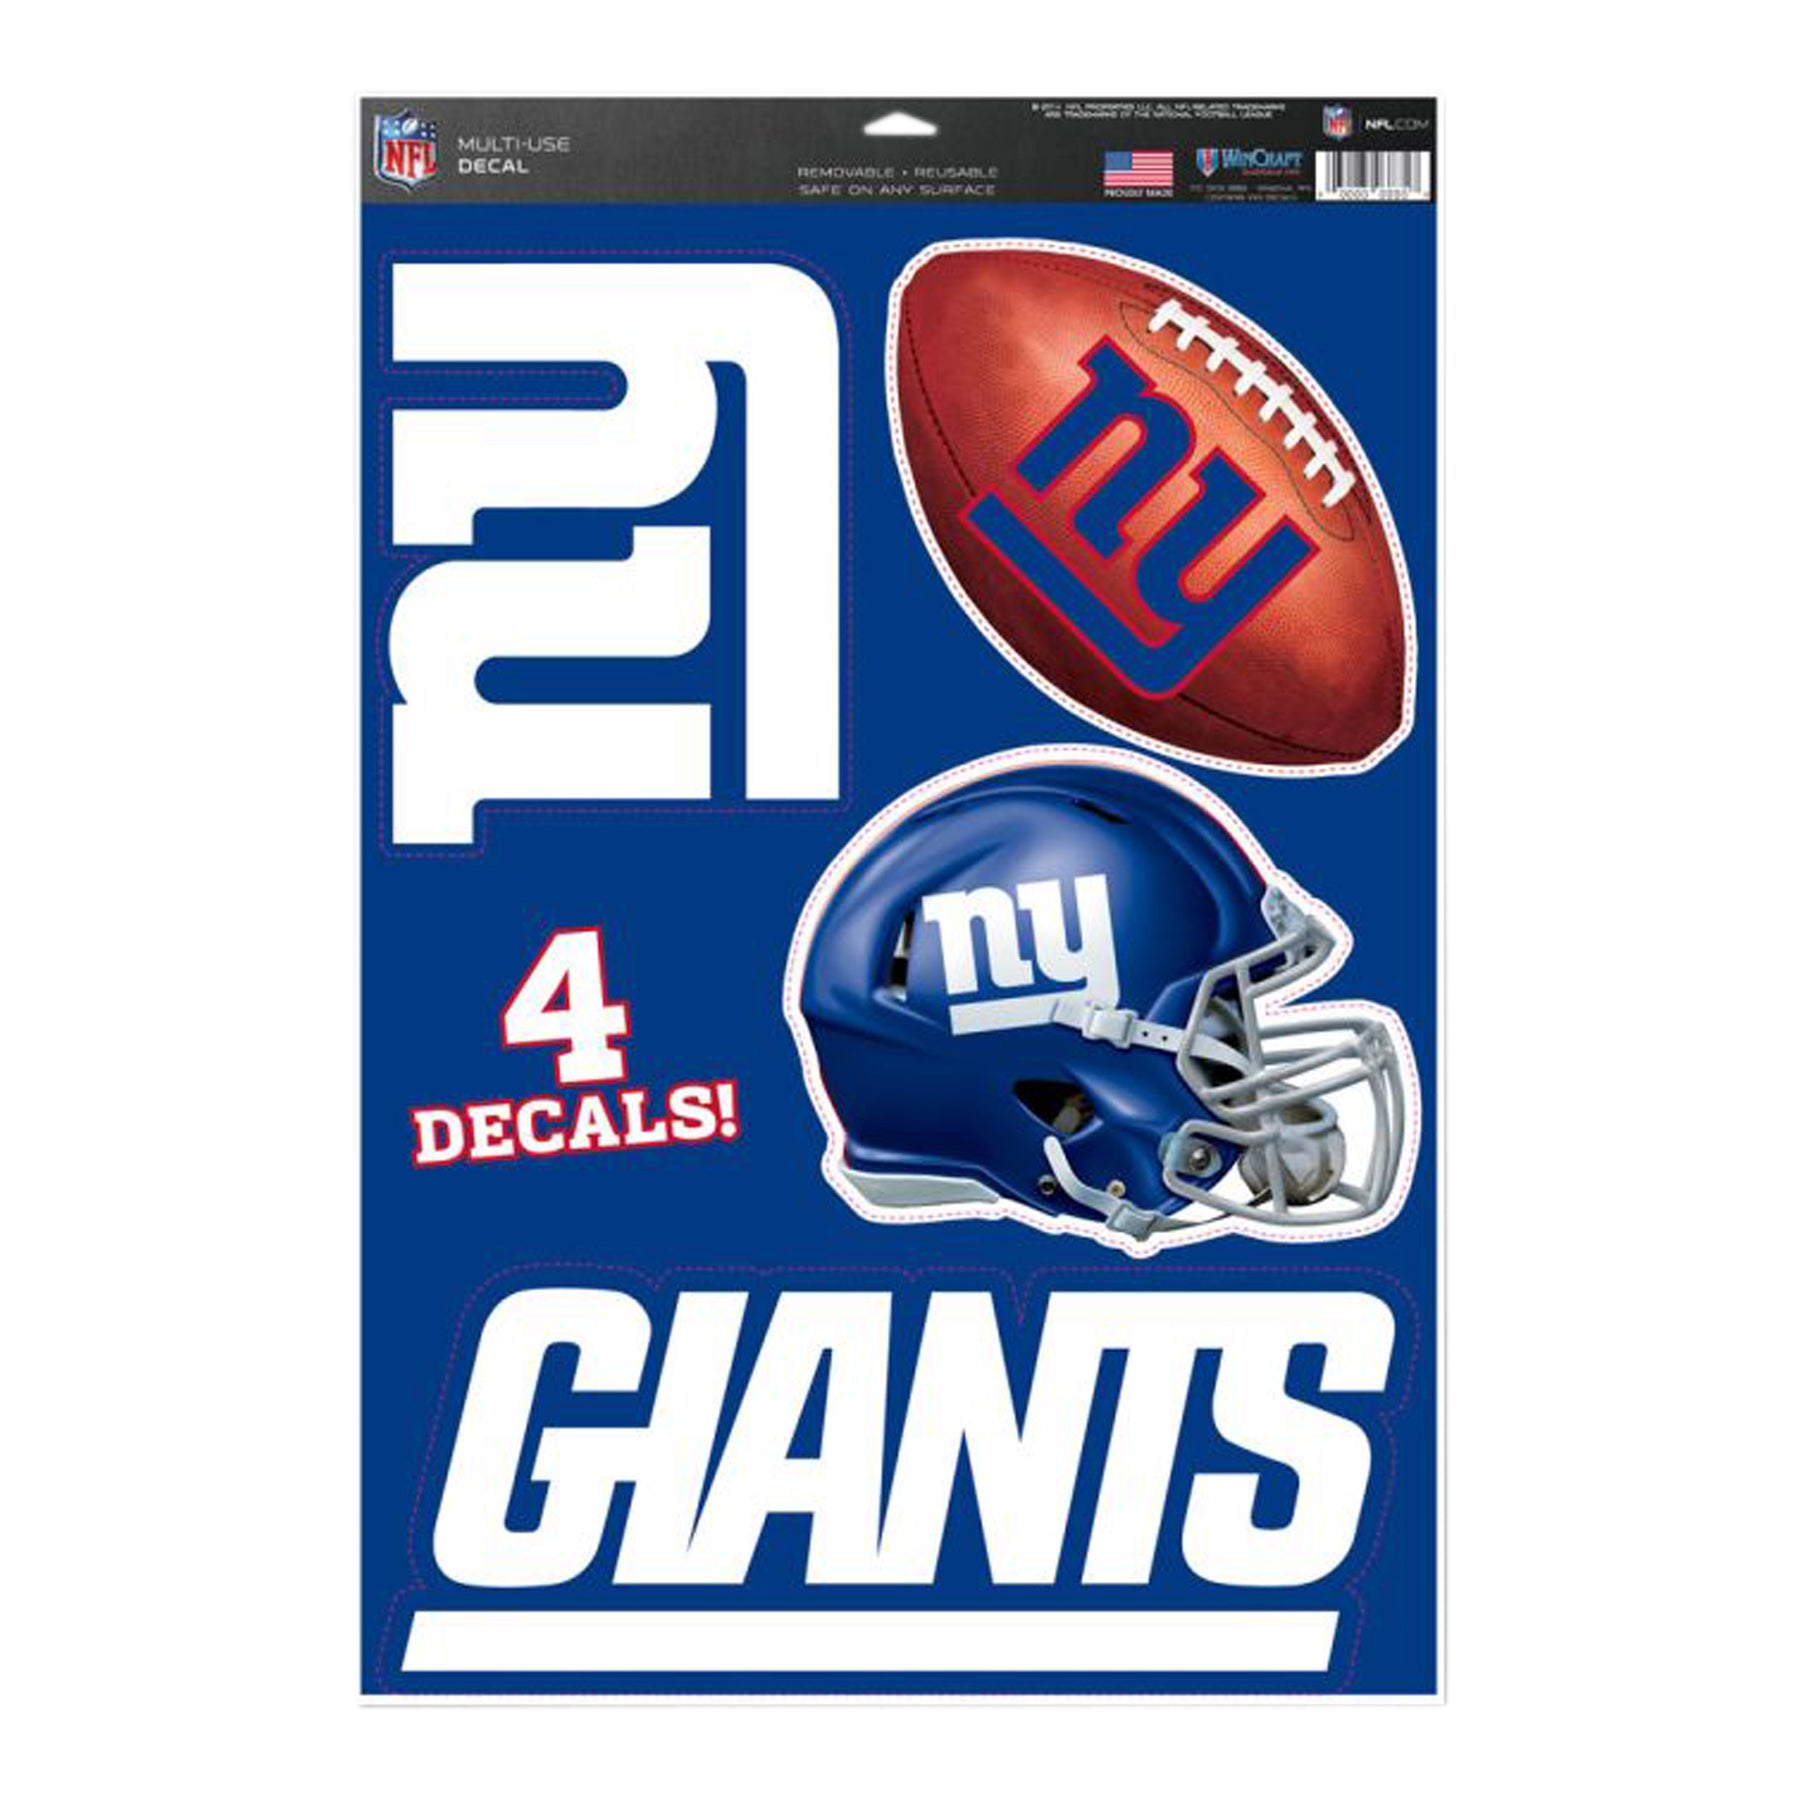 NY Giants 11x17 Decal